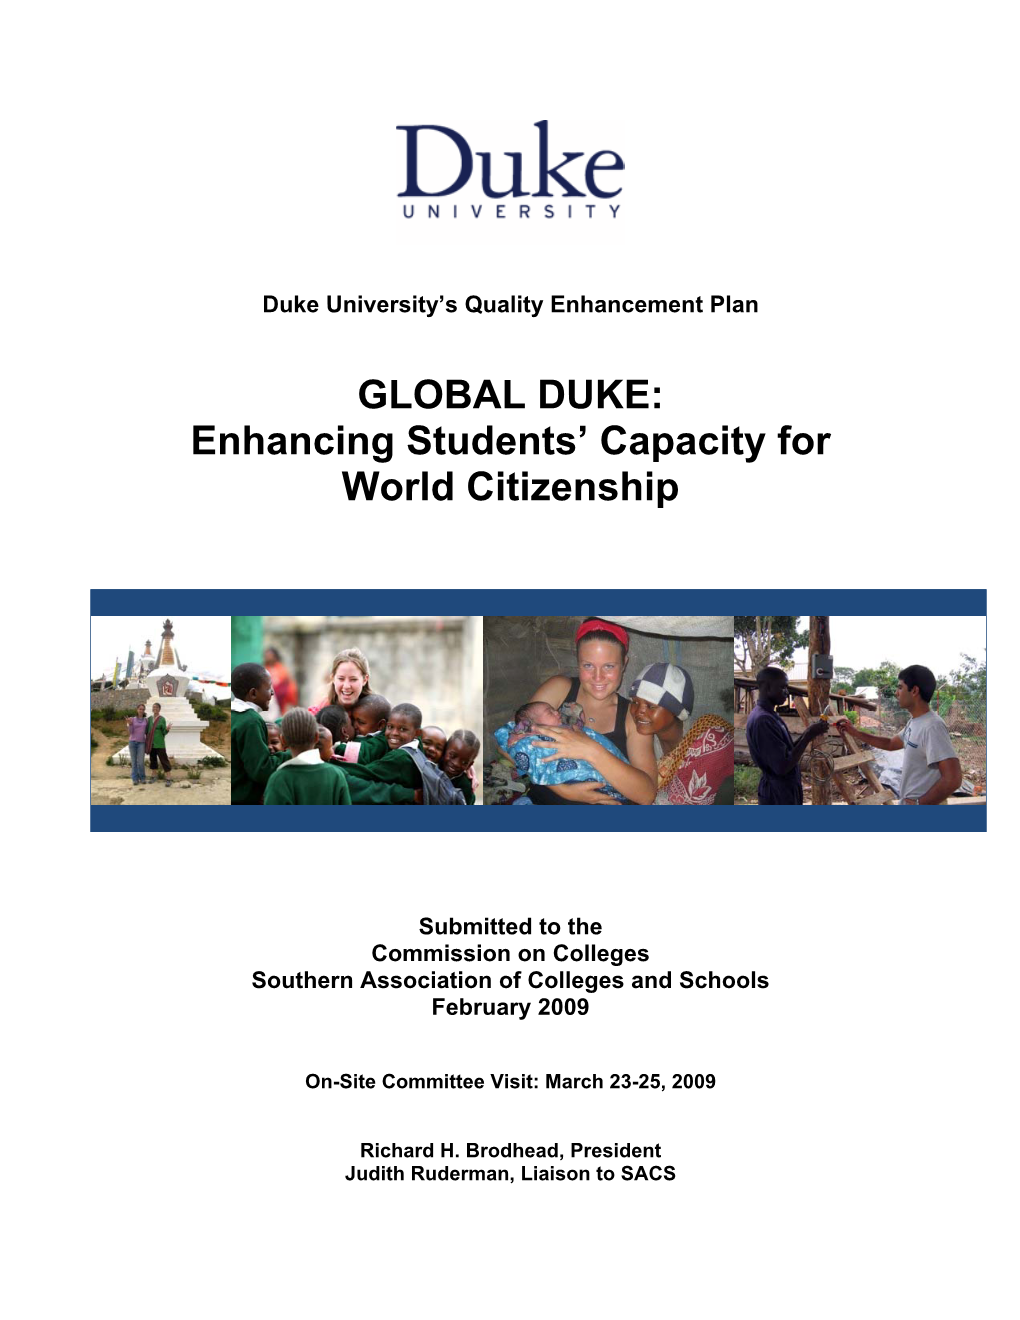 GLOBAL DUKE: Enhancing Students' Capacity for World Citizenship